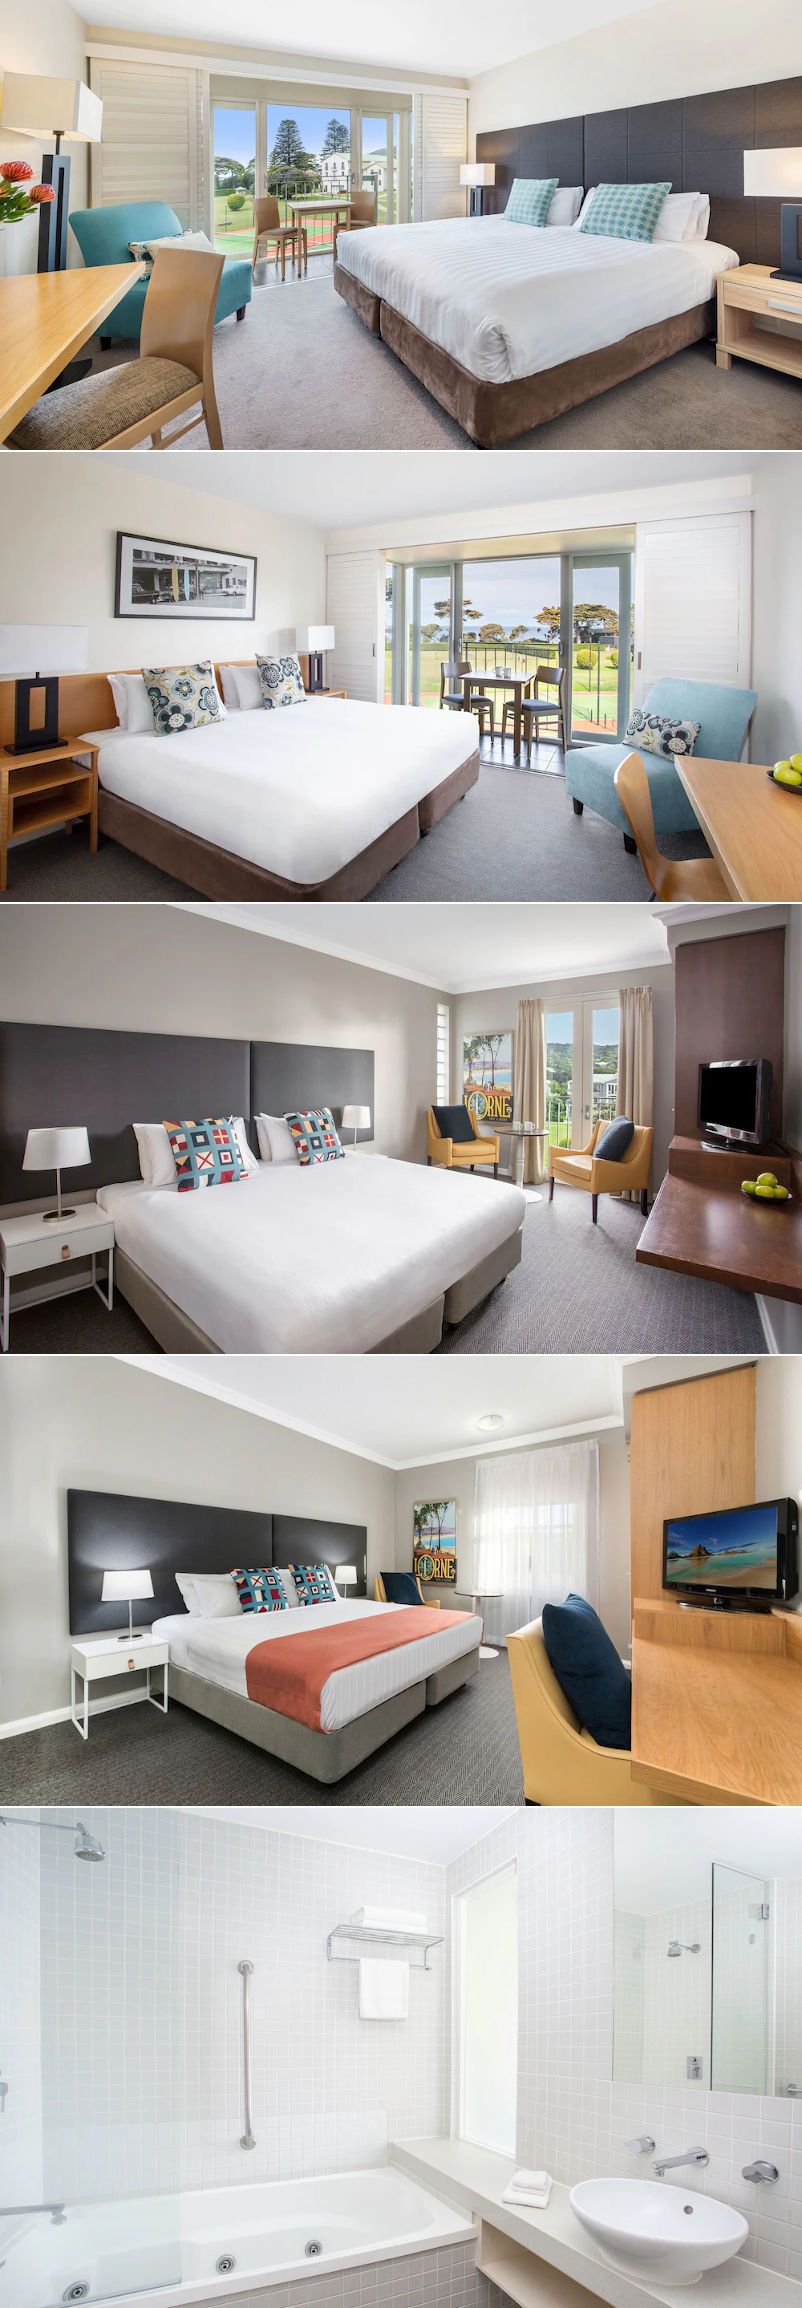 Mantra Lorne - Hotel rooms